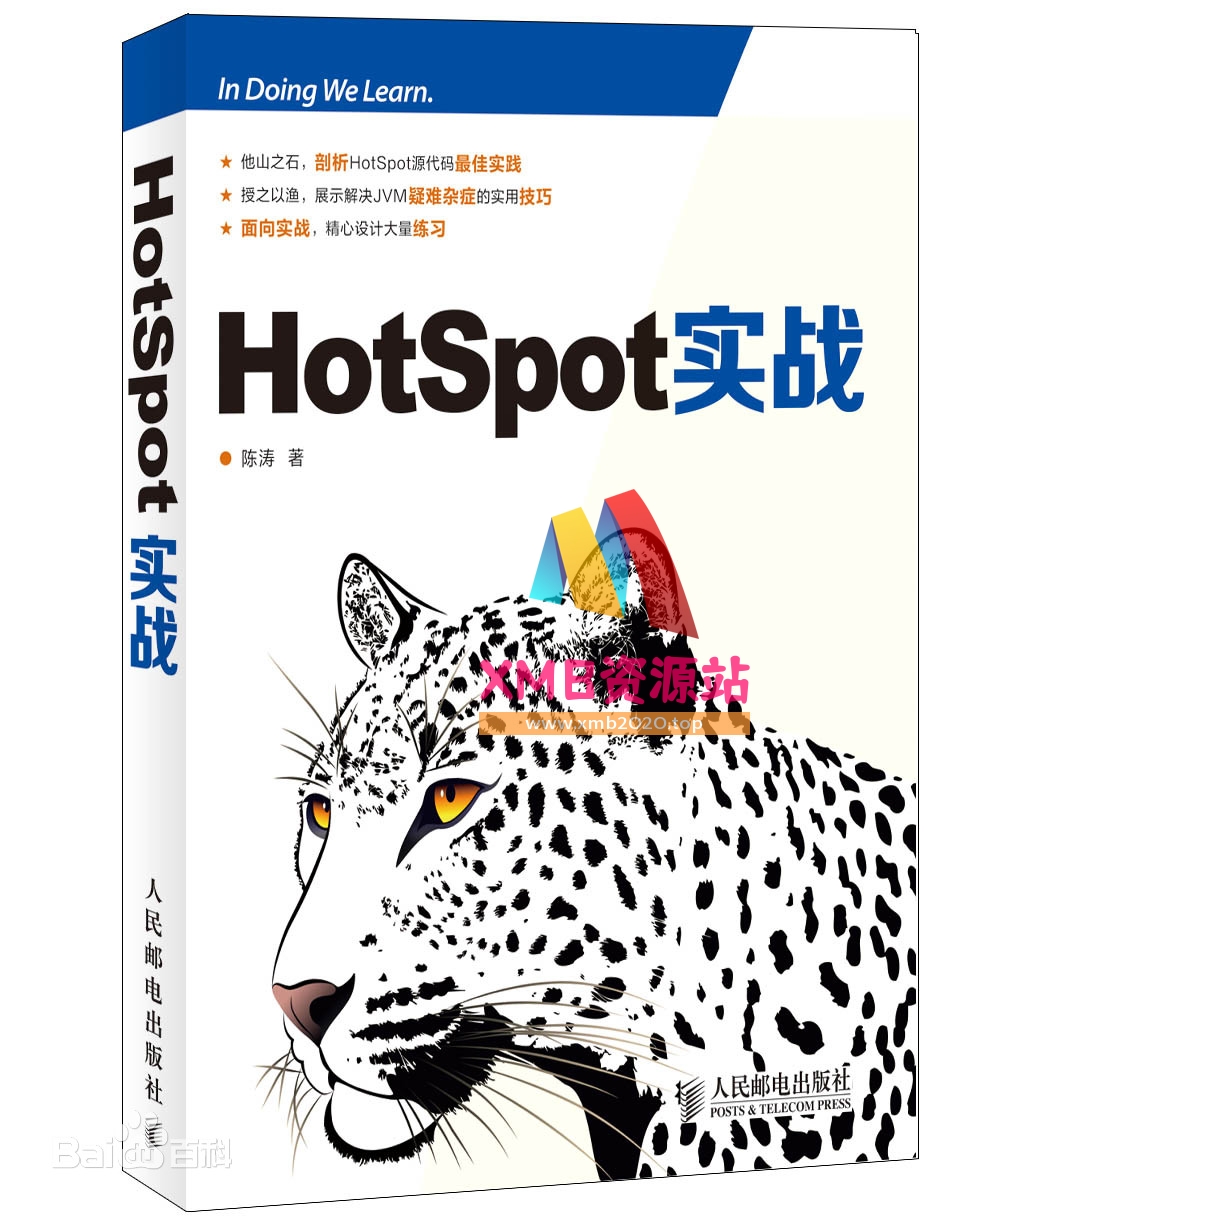 【xmb2020.top】HotSpot实战.pdf【XMB资源站】